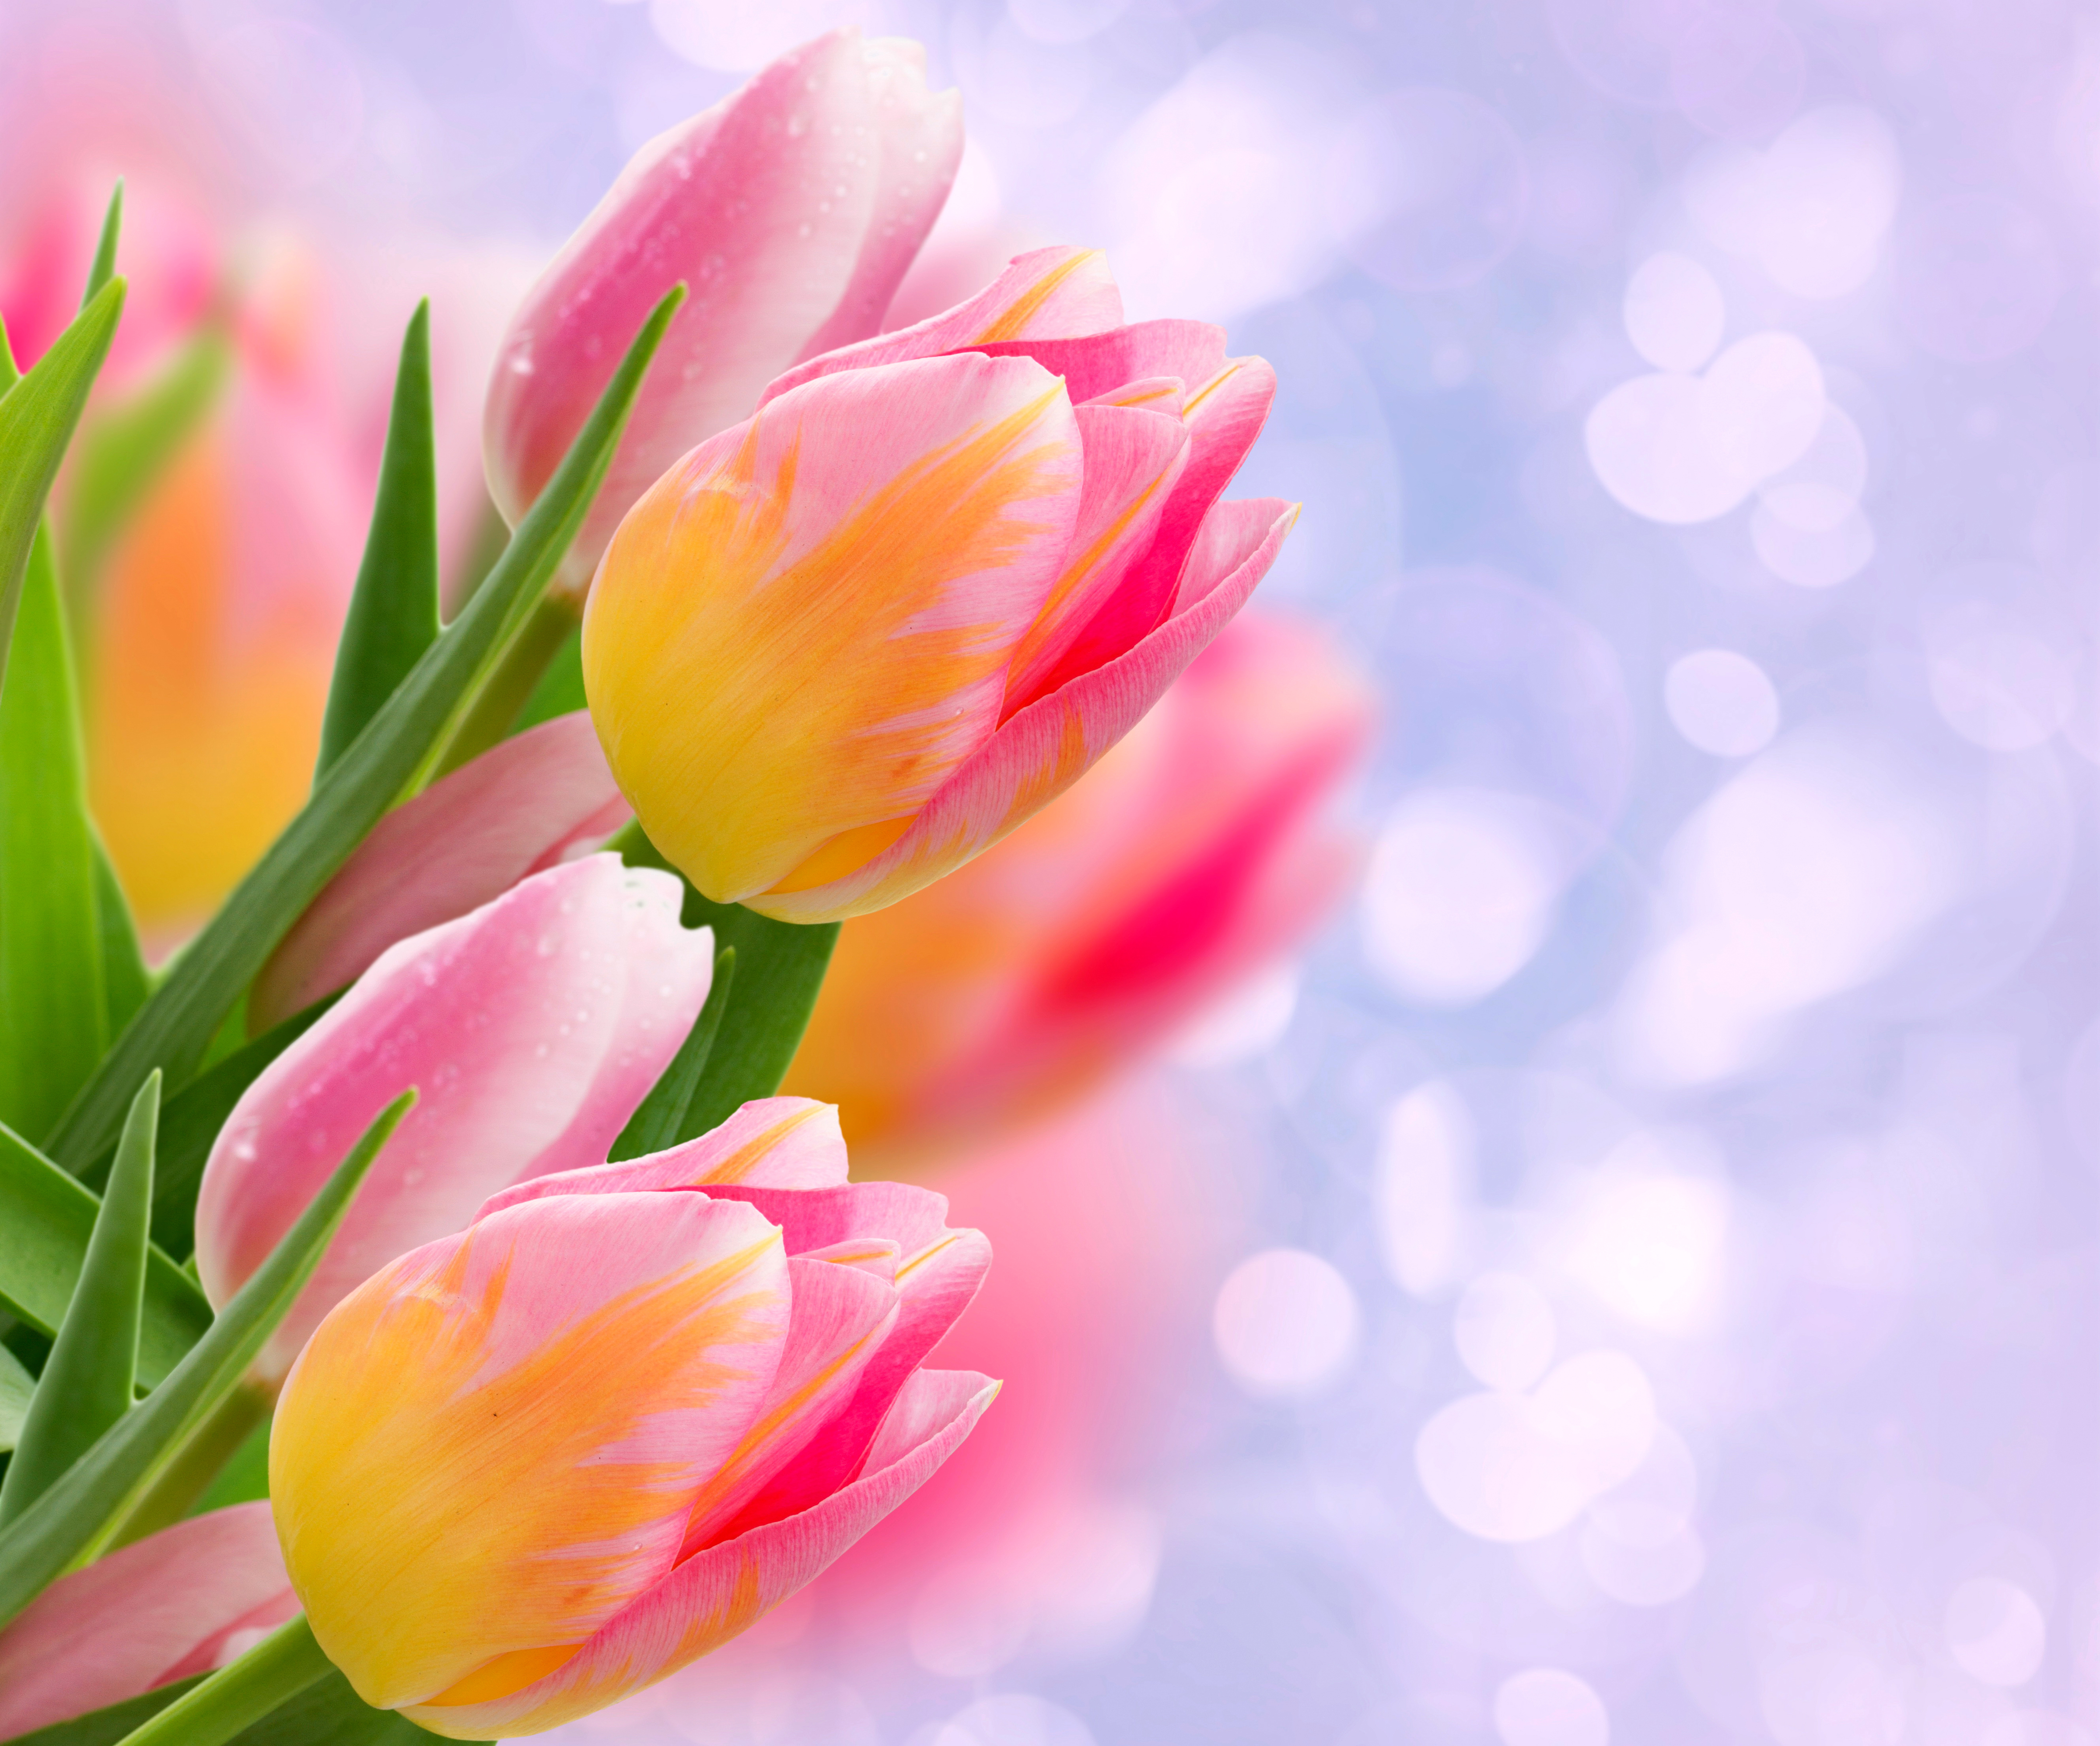 Pink Tulips 4k Ultra HD Wallpaper | Background Image ...